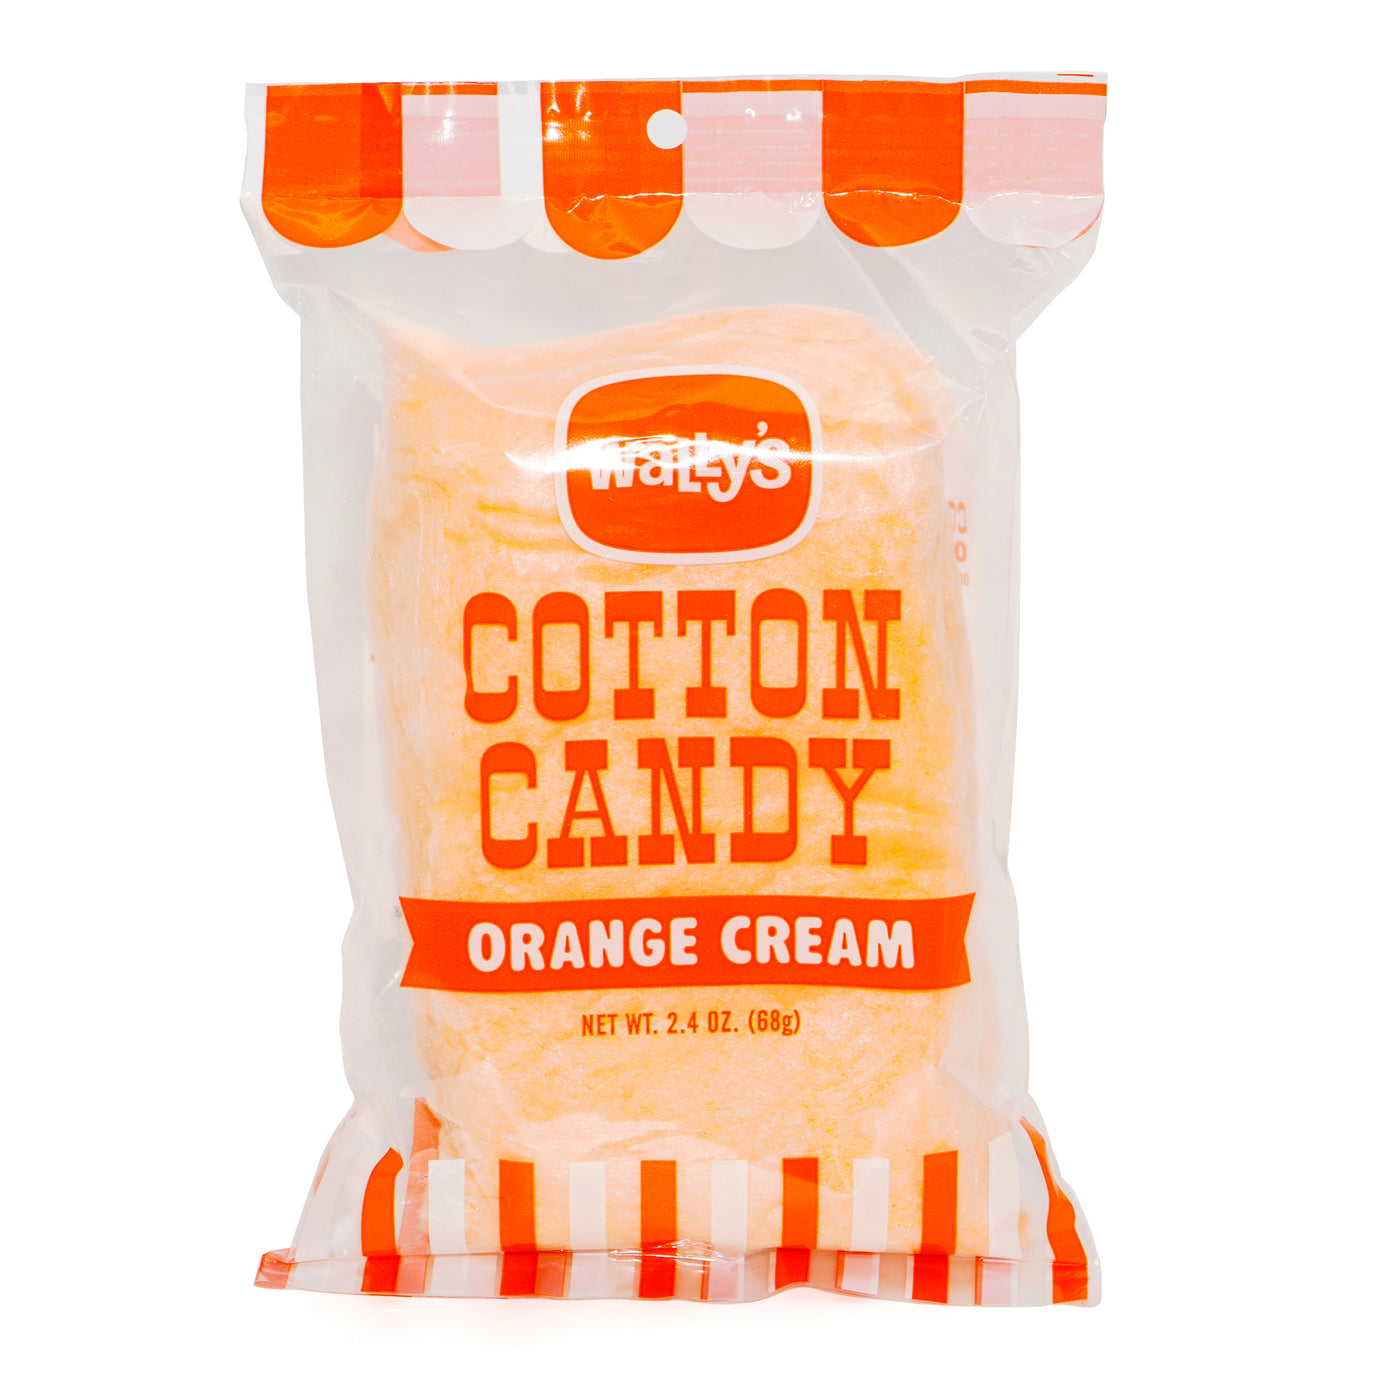 Wally's Orange Cream Cotton Candy